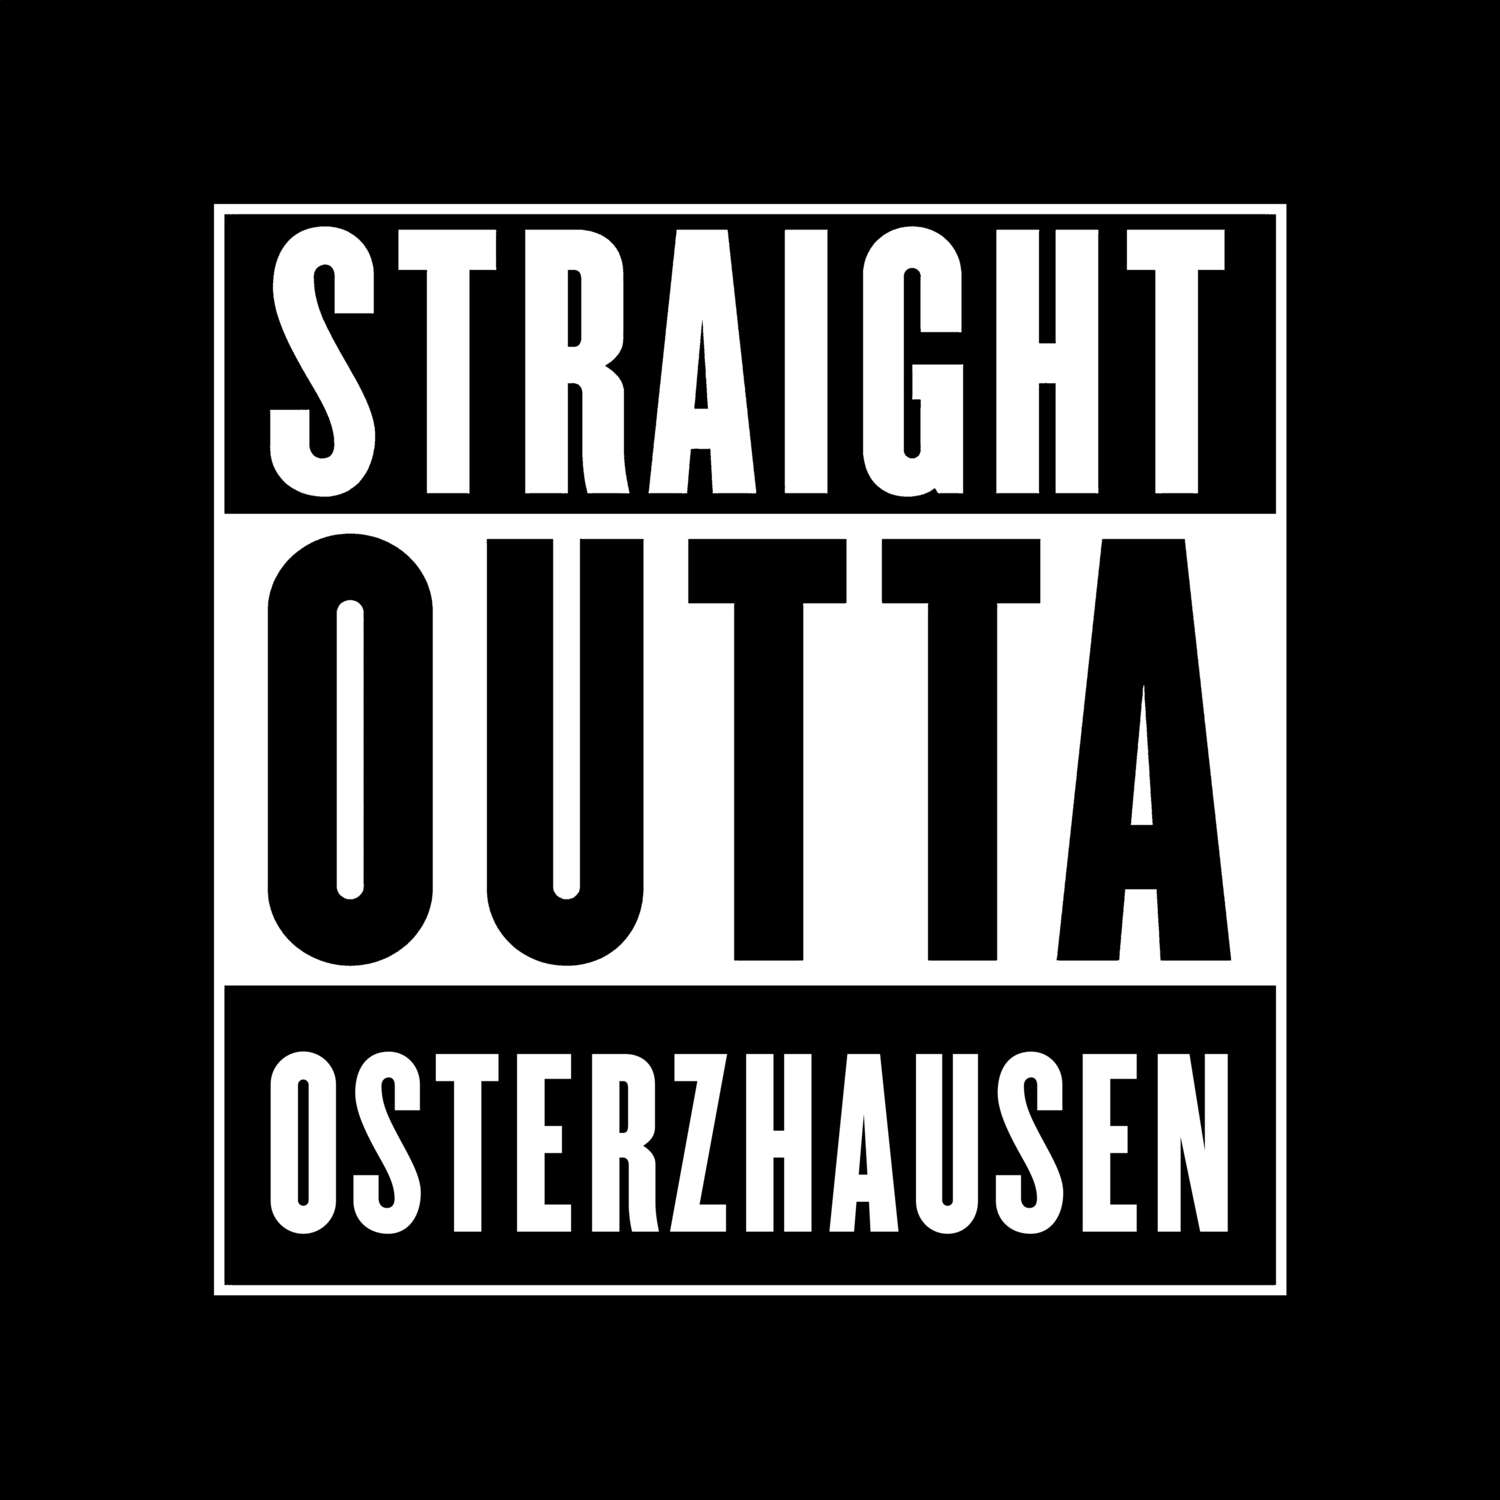 Osterzhausen T-Shirt »Straight Outta«